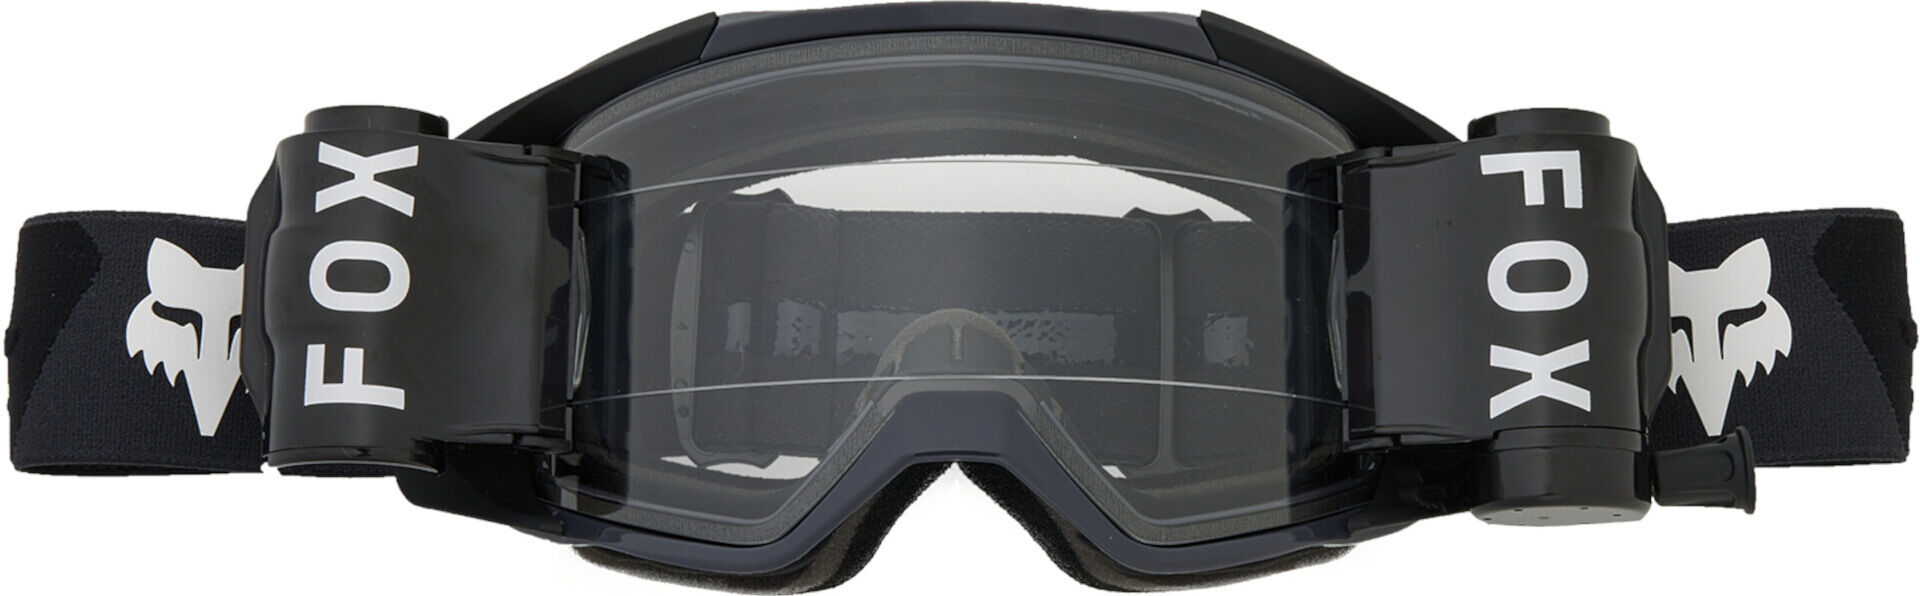 Fox Vue Roll Off Gafas de motocross - Negro Blanco (un tamaño)